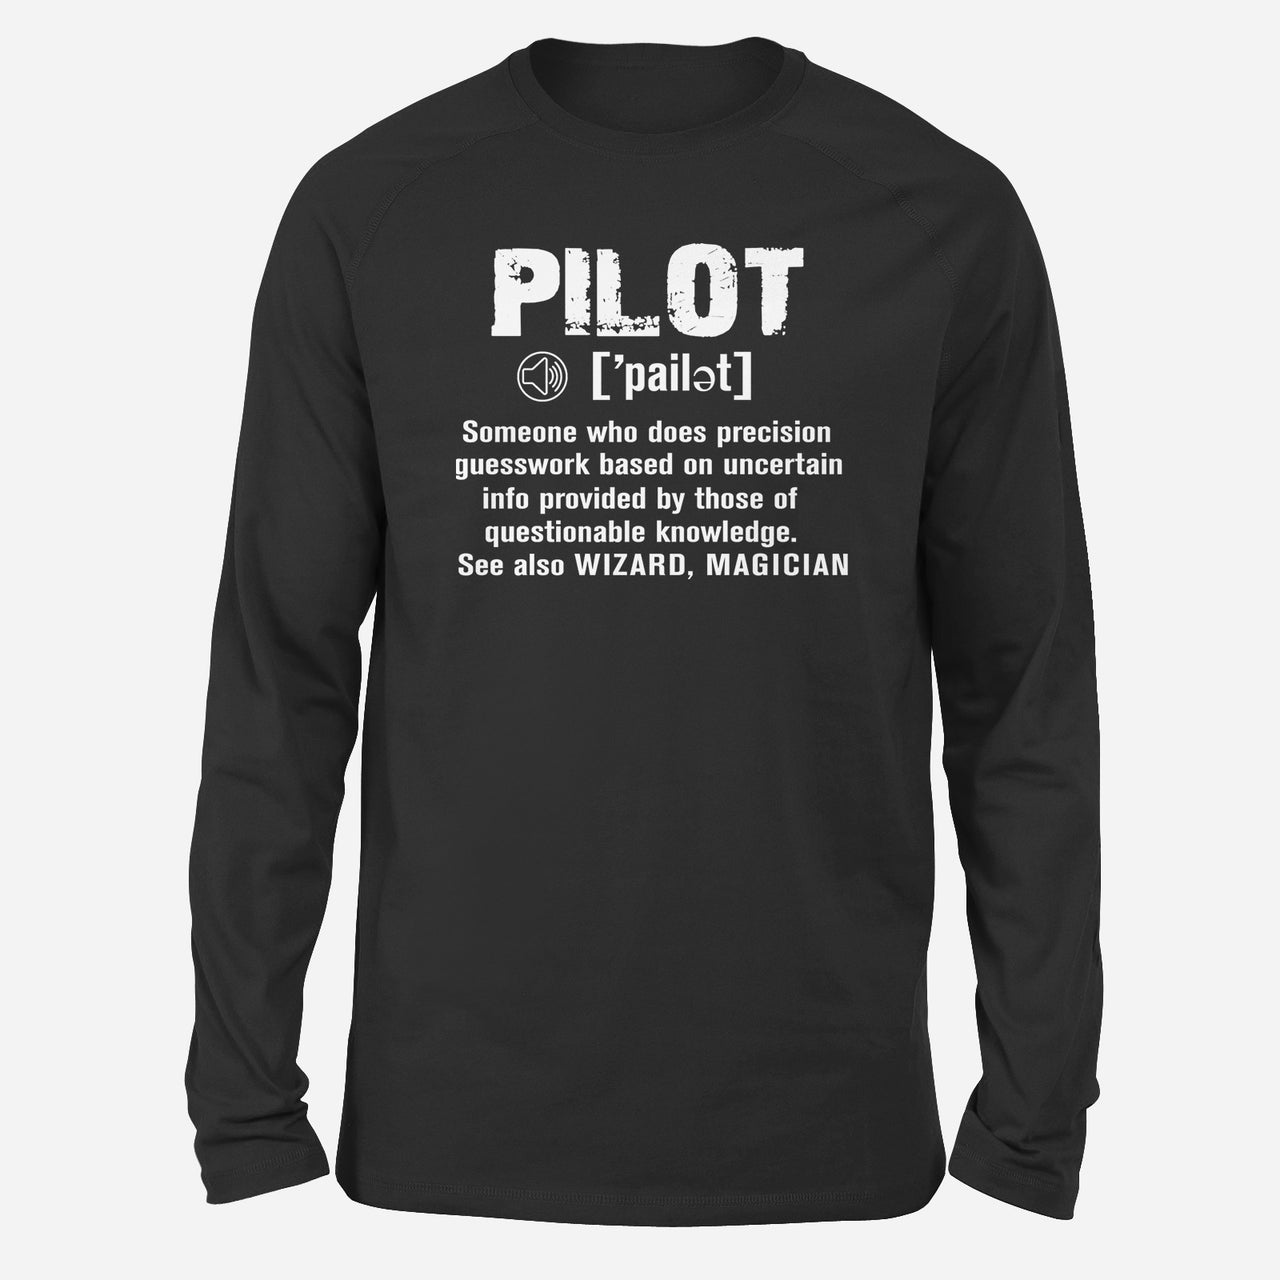 Pilot [Noun] Designed Long-Sleeve T-Shirts